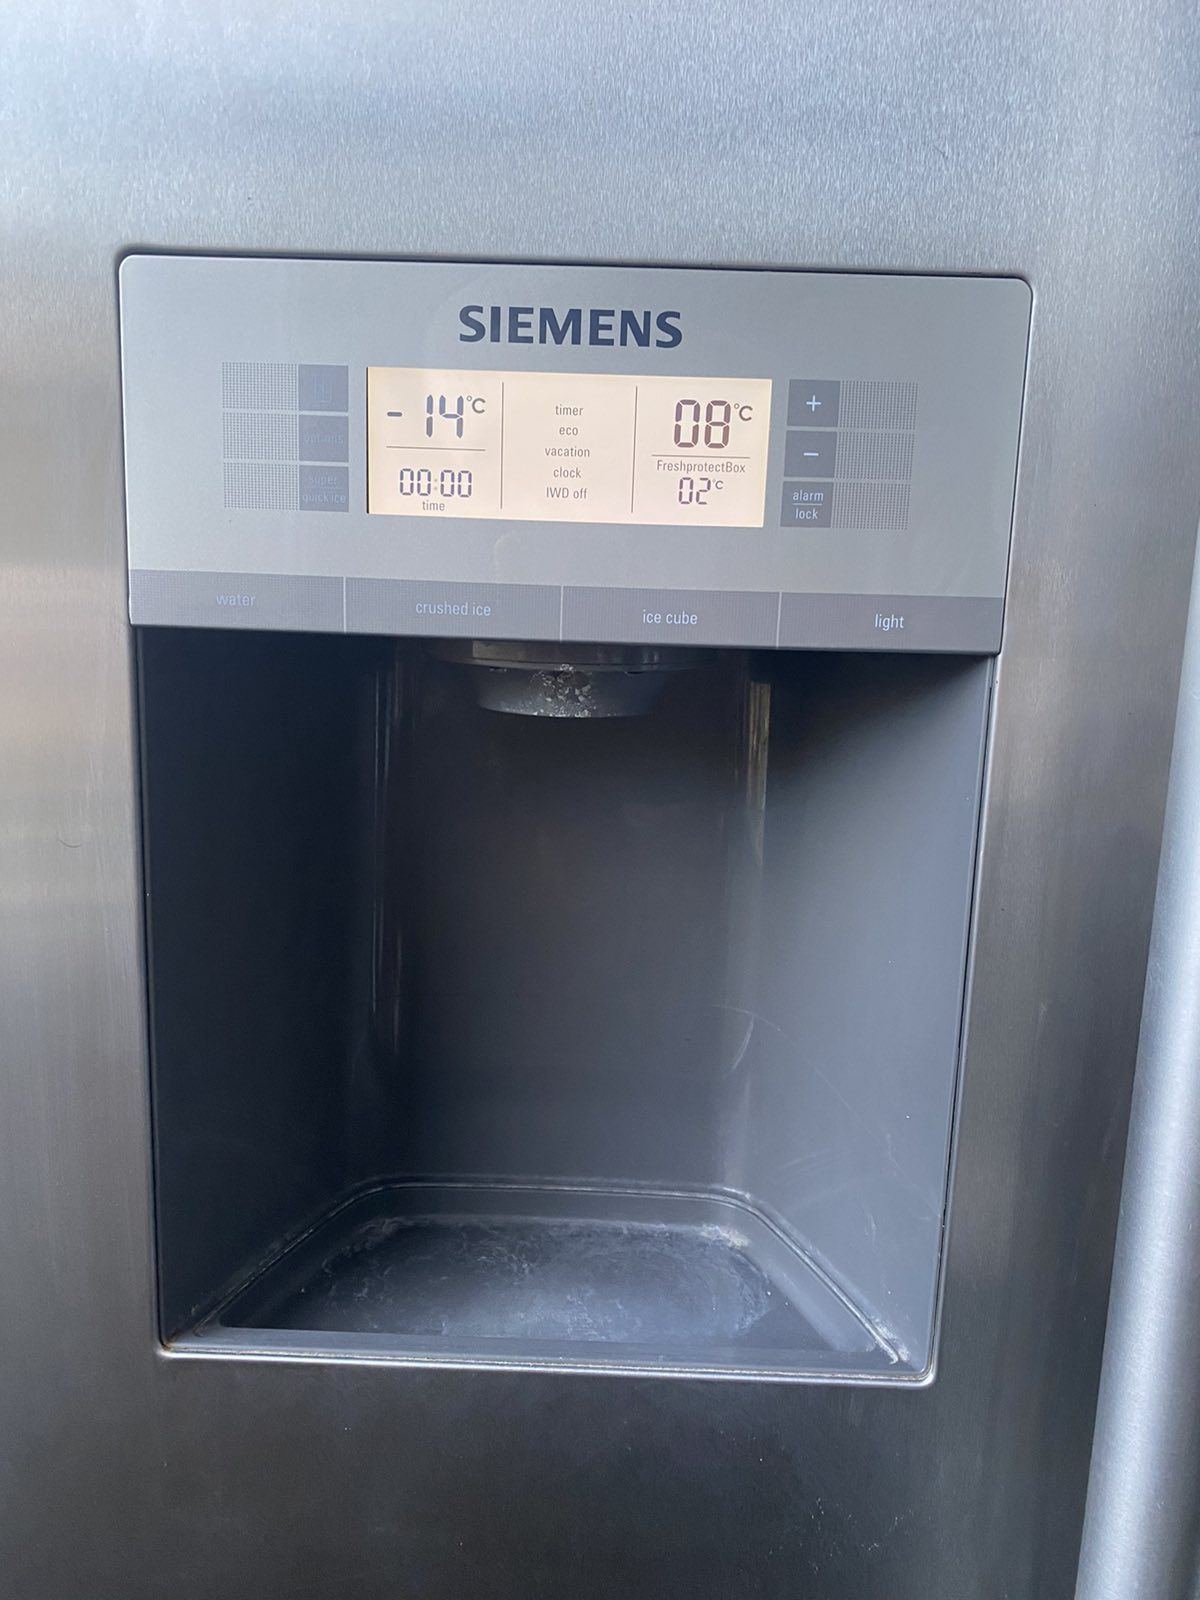 Холодильник side by side SIEMENS
(Side-by-side?
збоку (Side-by-sideSIE